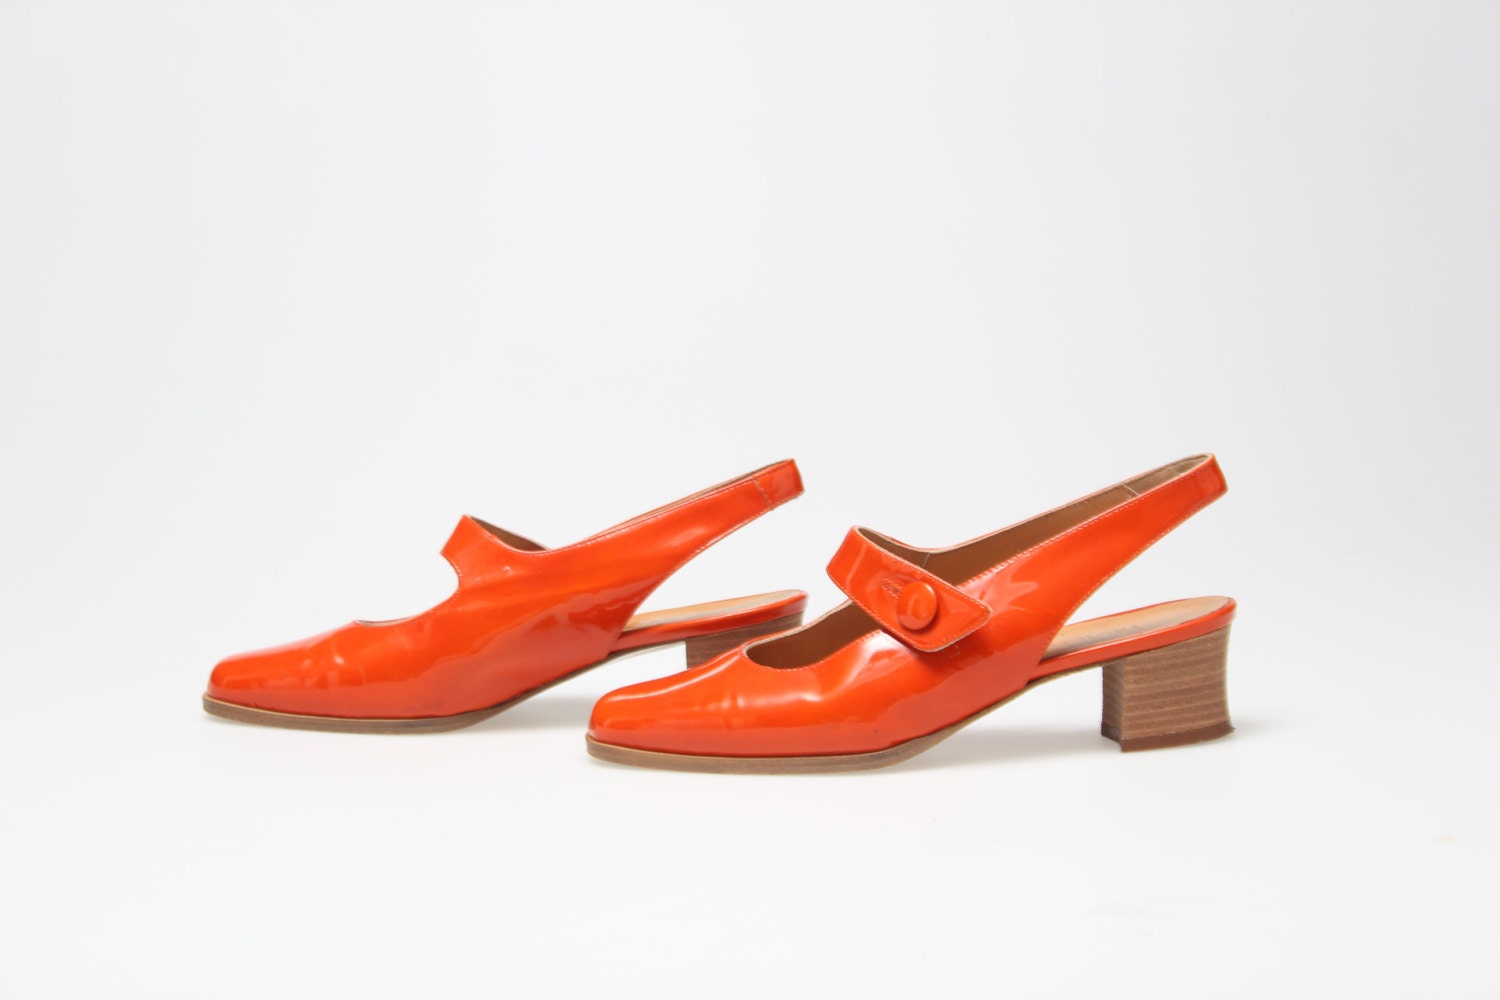 60's sabot // orange patent leather shoes vintage